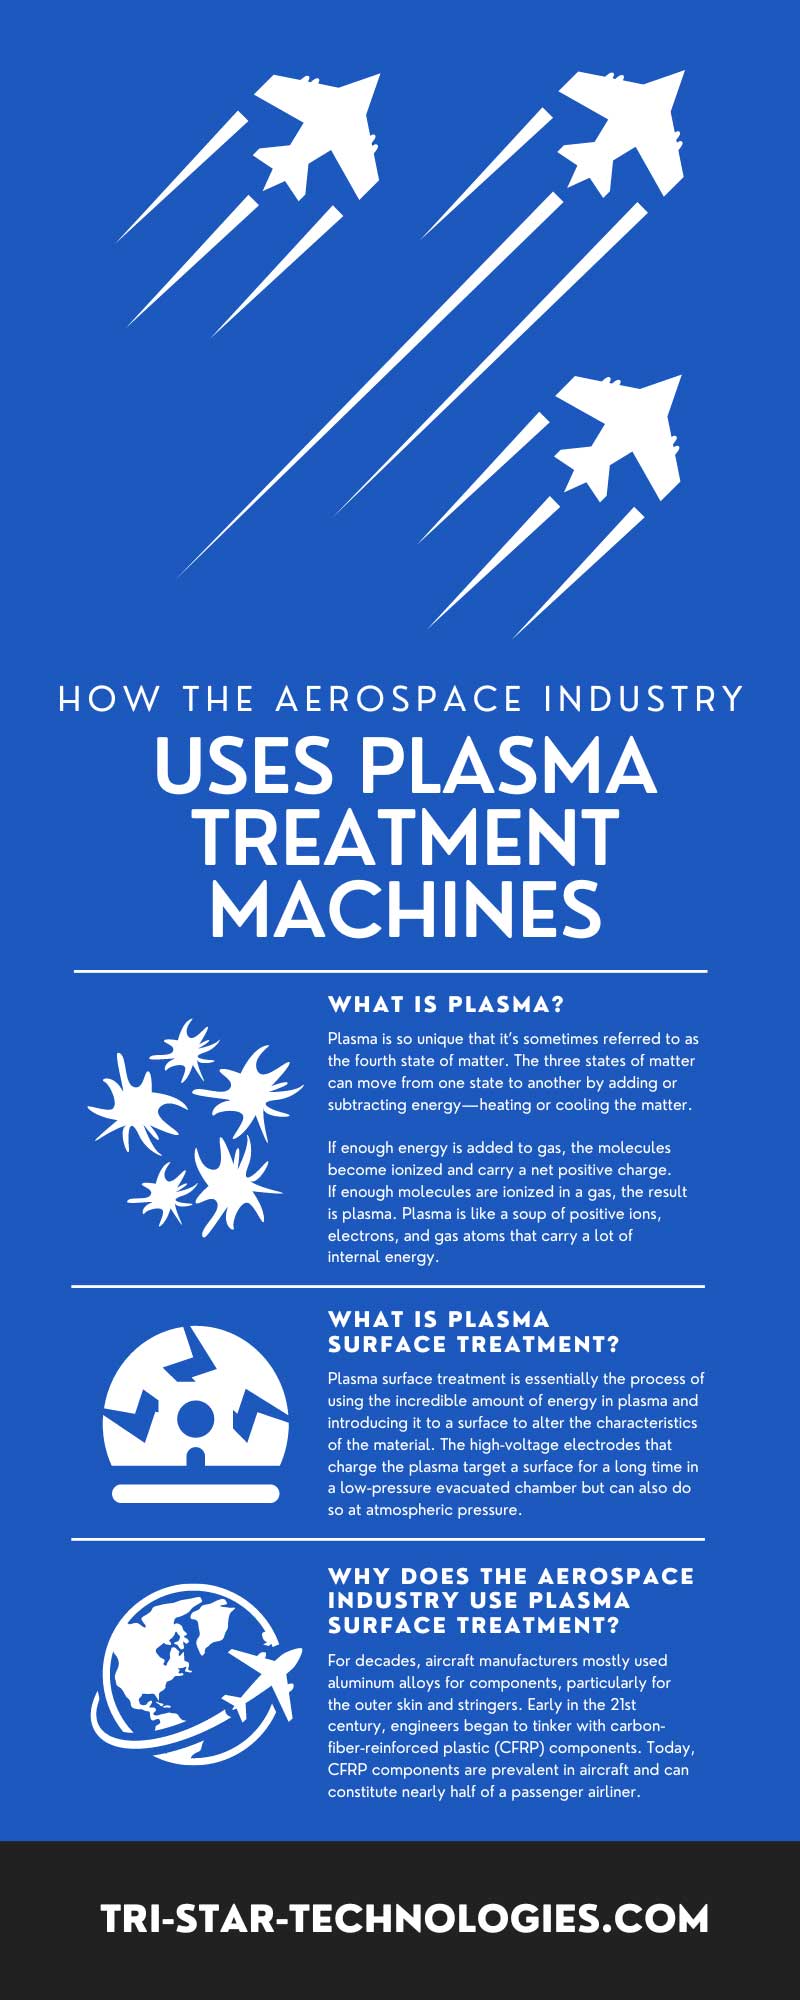 How the Aerospace Industry Uses Plasma Treatment Machines